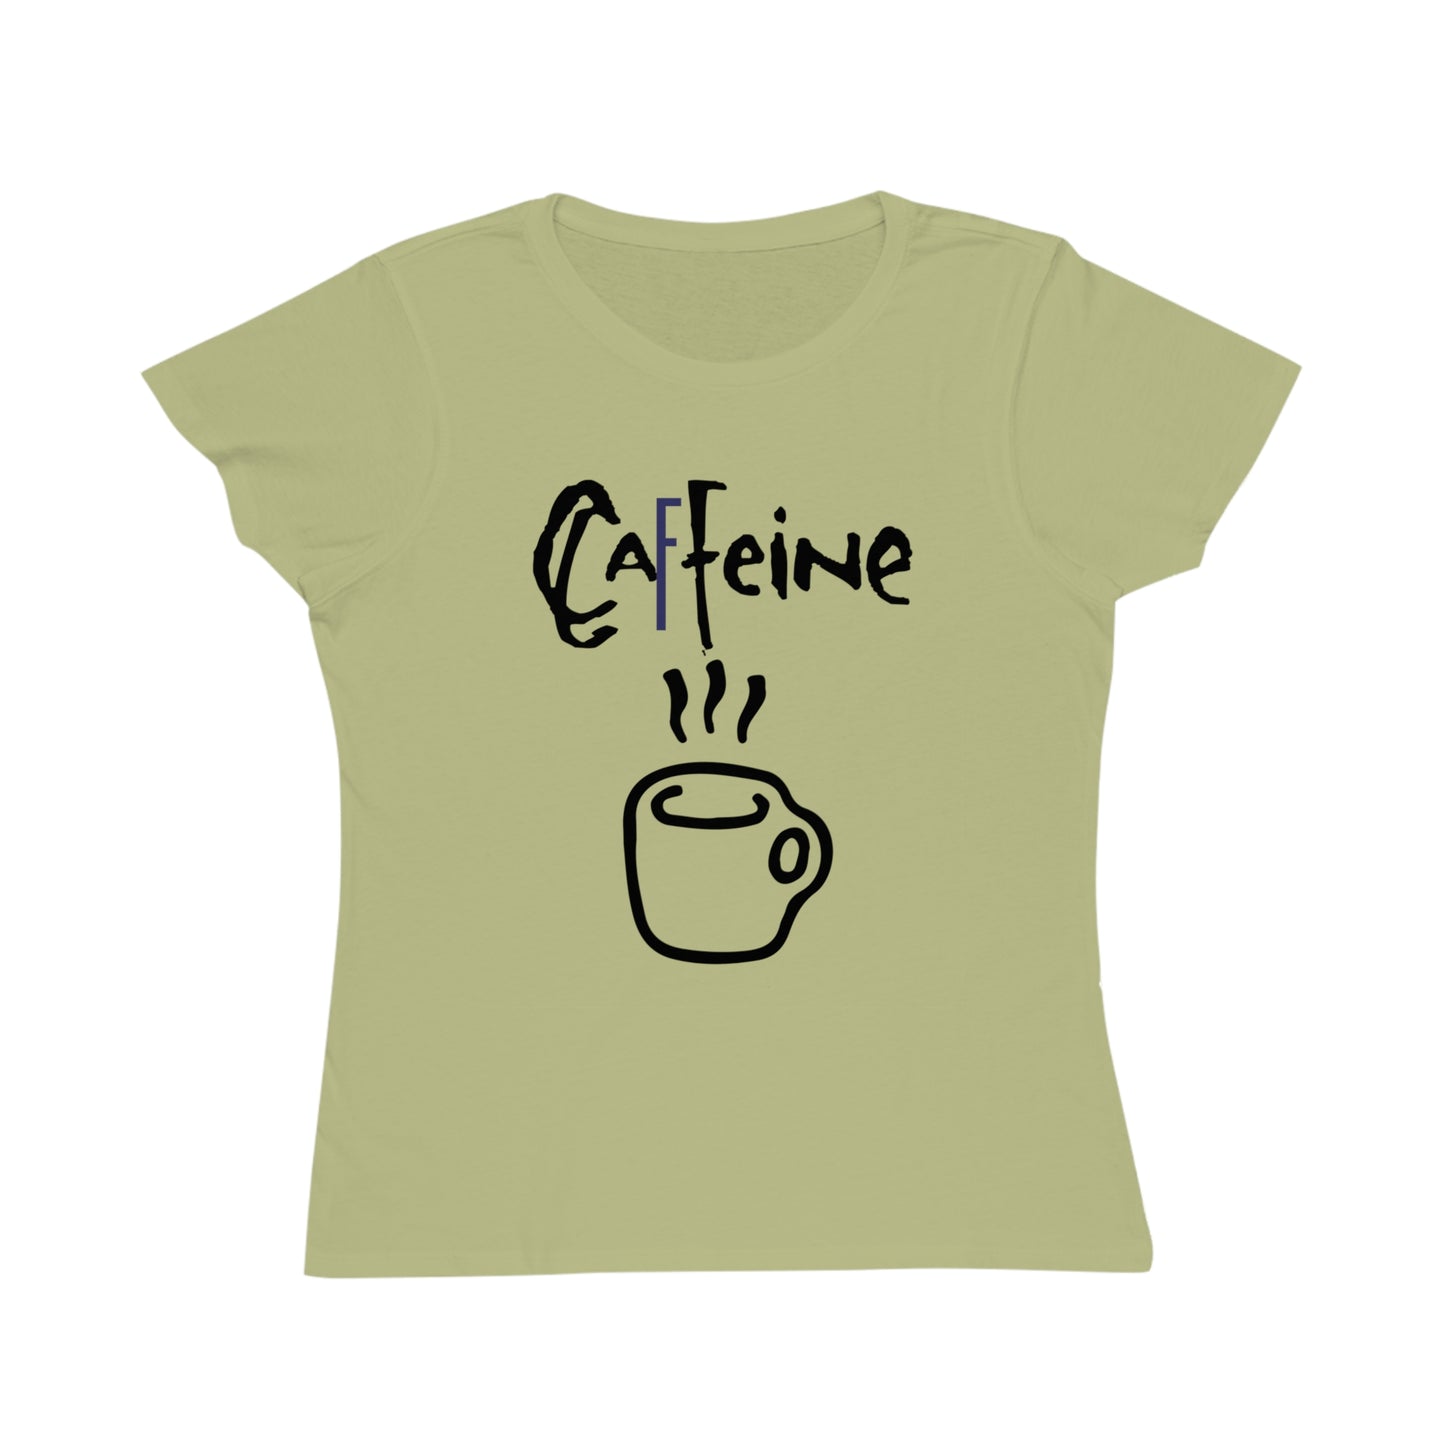 Caffeine Magazine "OG" Organic Women's Classic T-Shirt